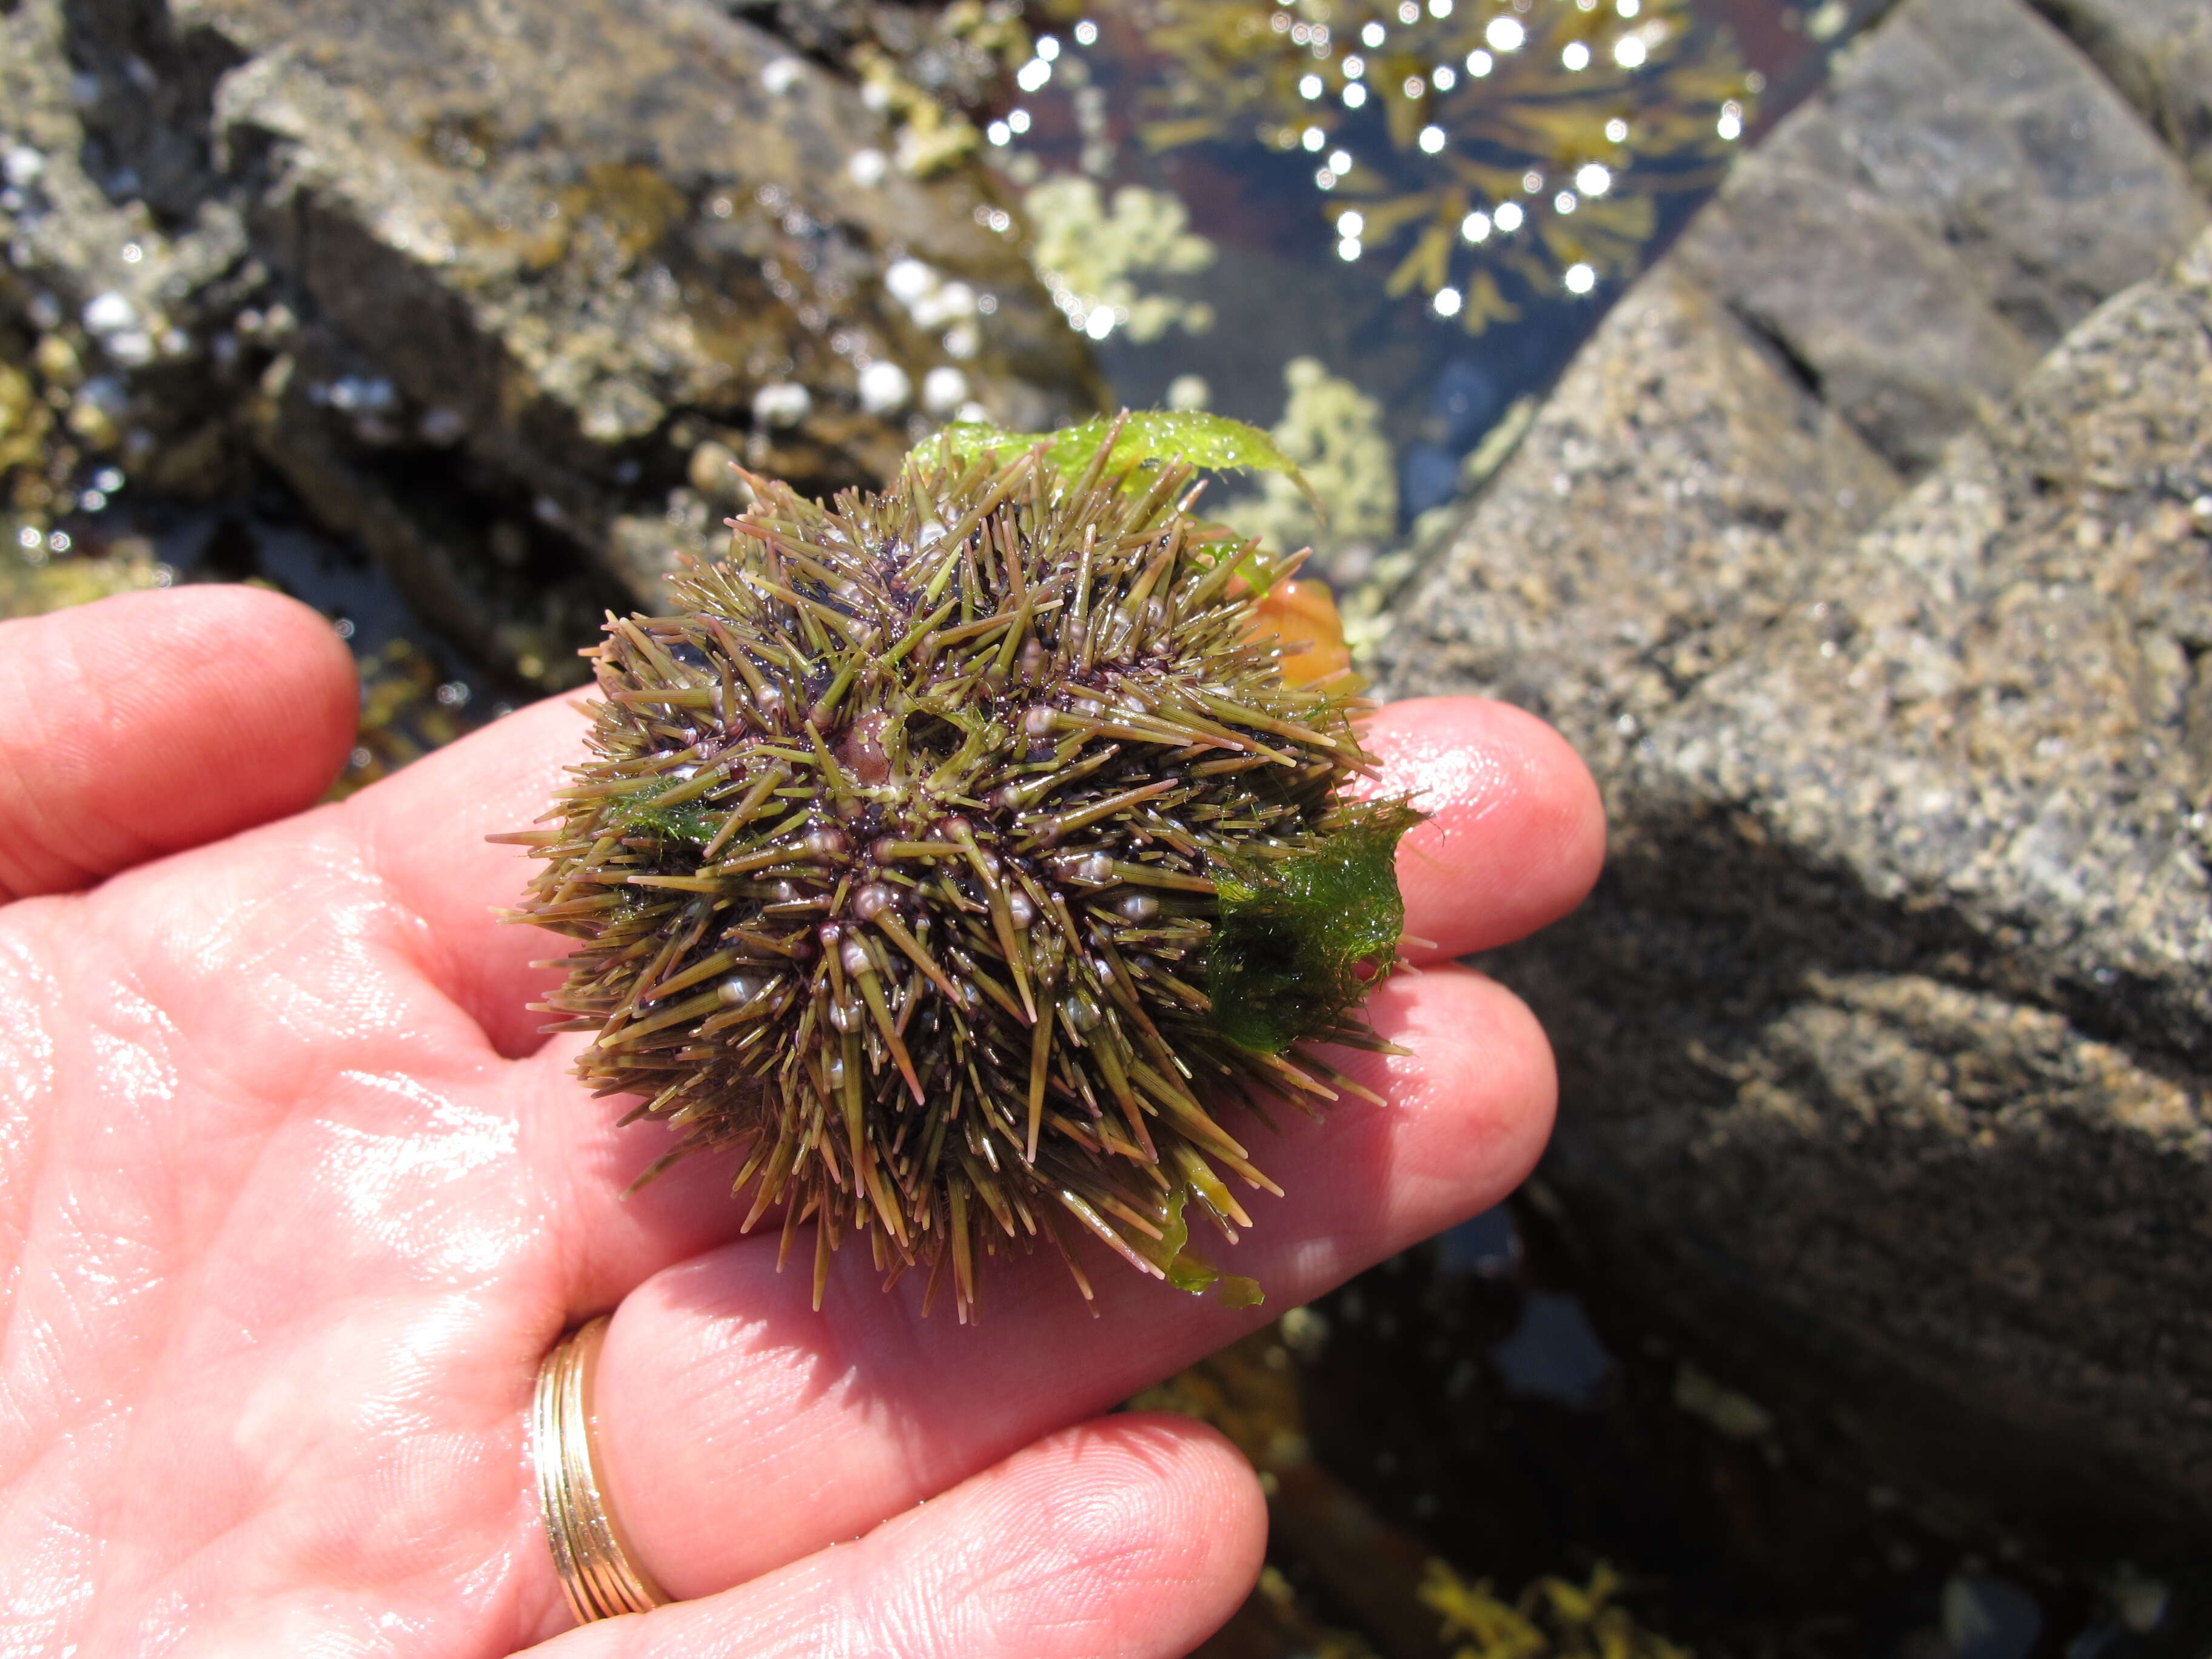 Image of green sea urchin